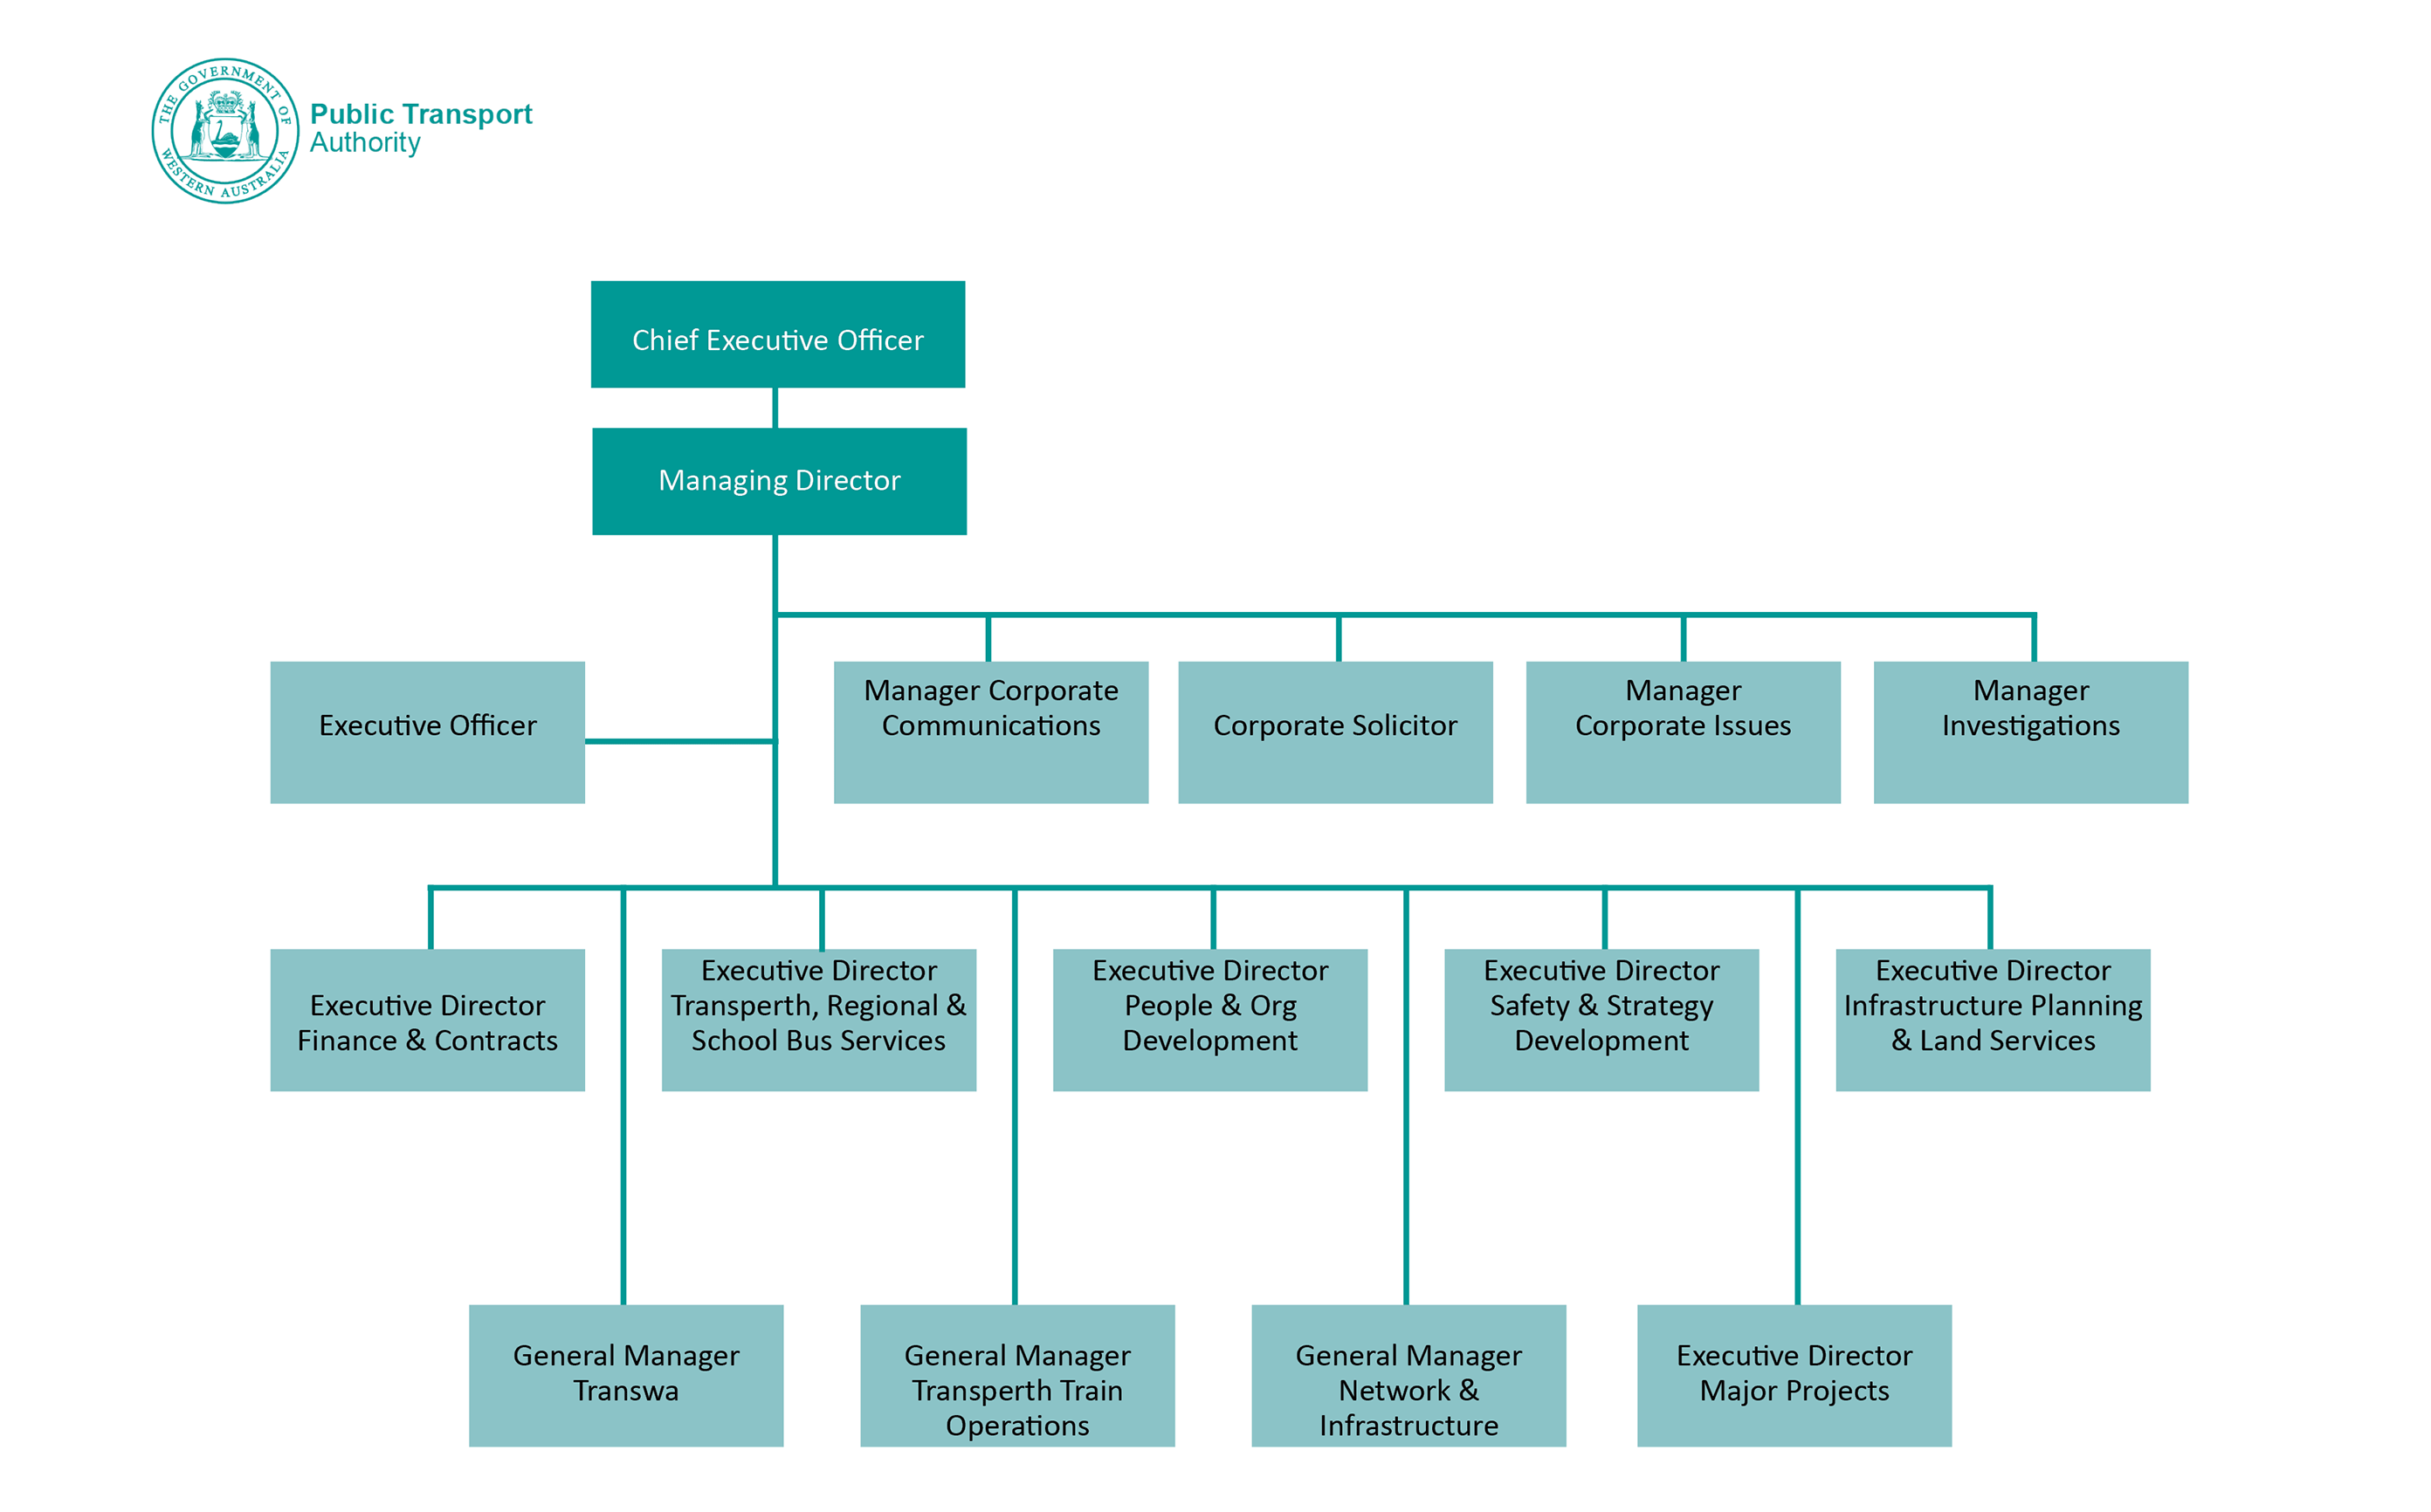 Network Rail Organisation Chart